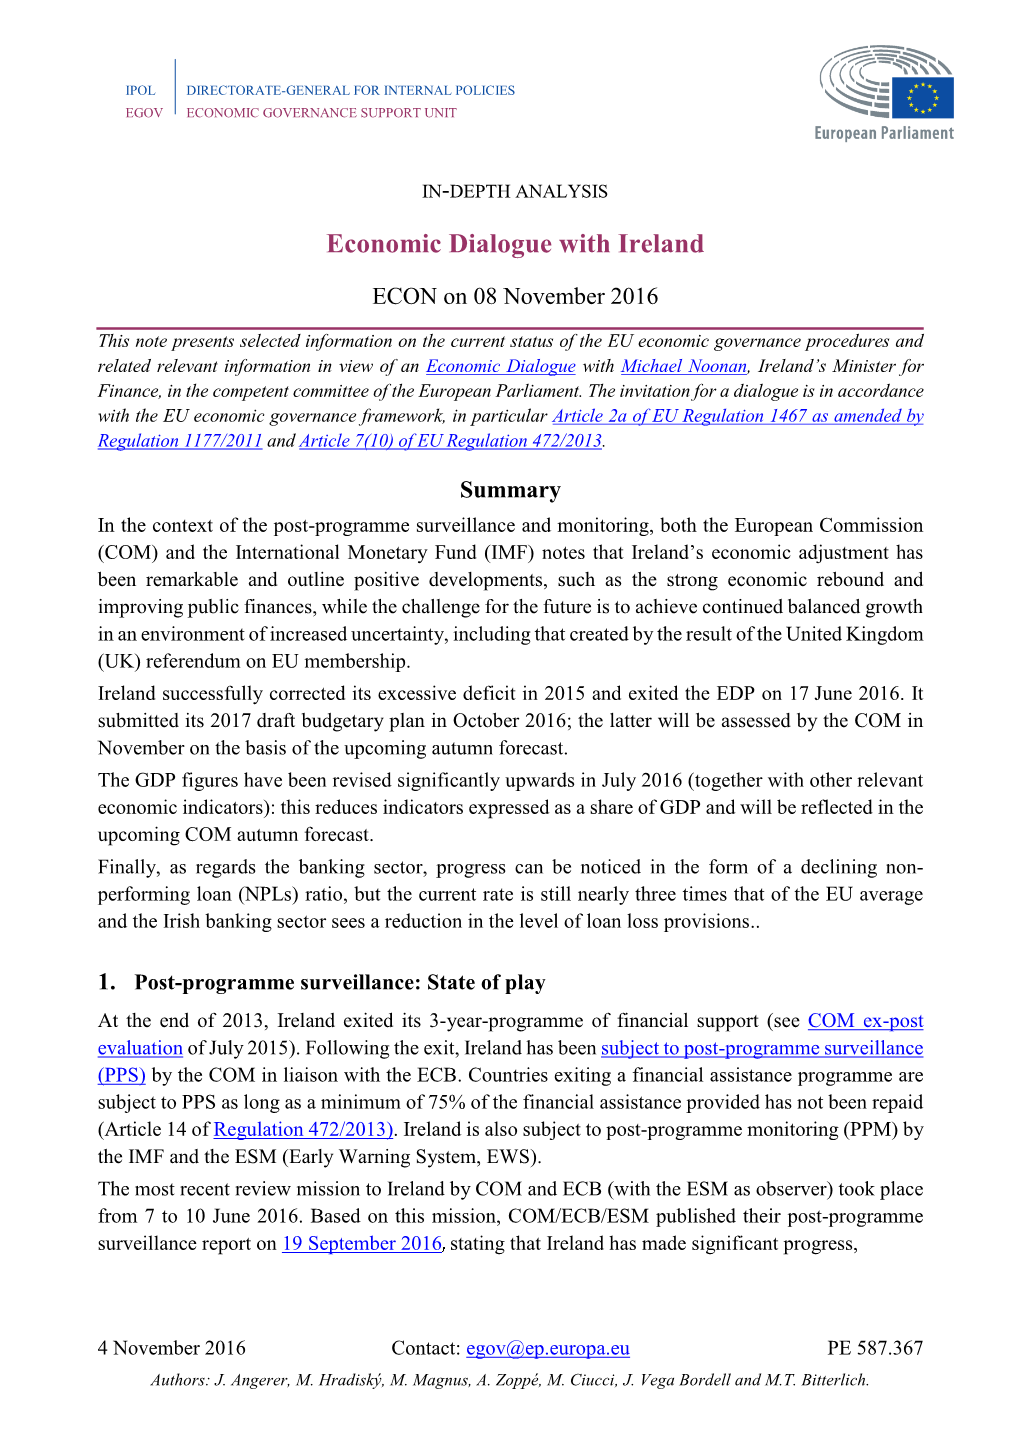 Economic Dialogue with Ireland